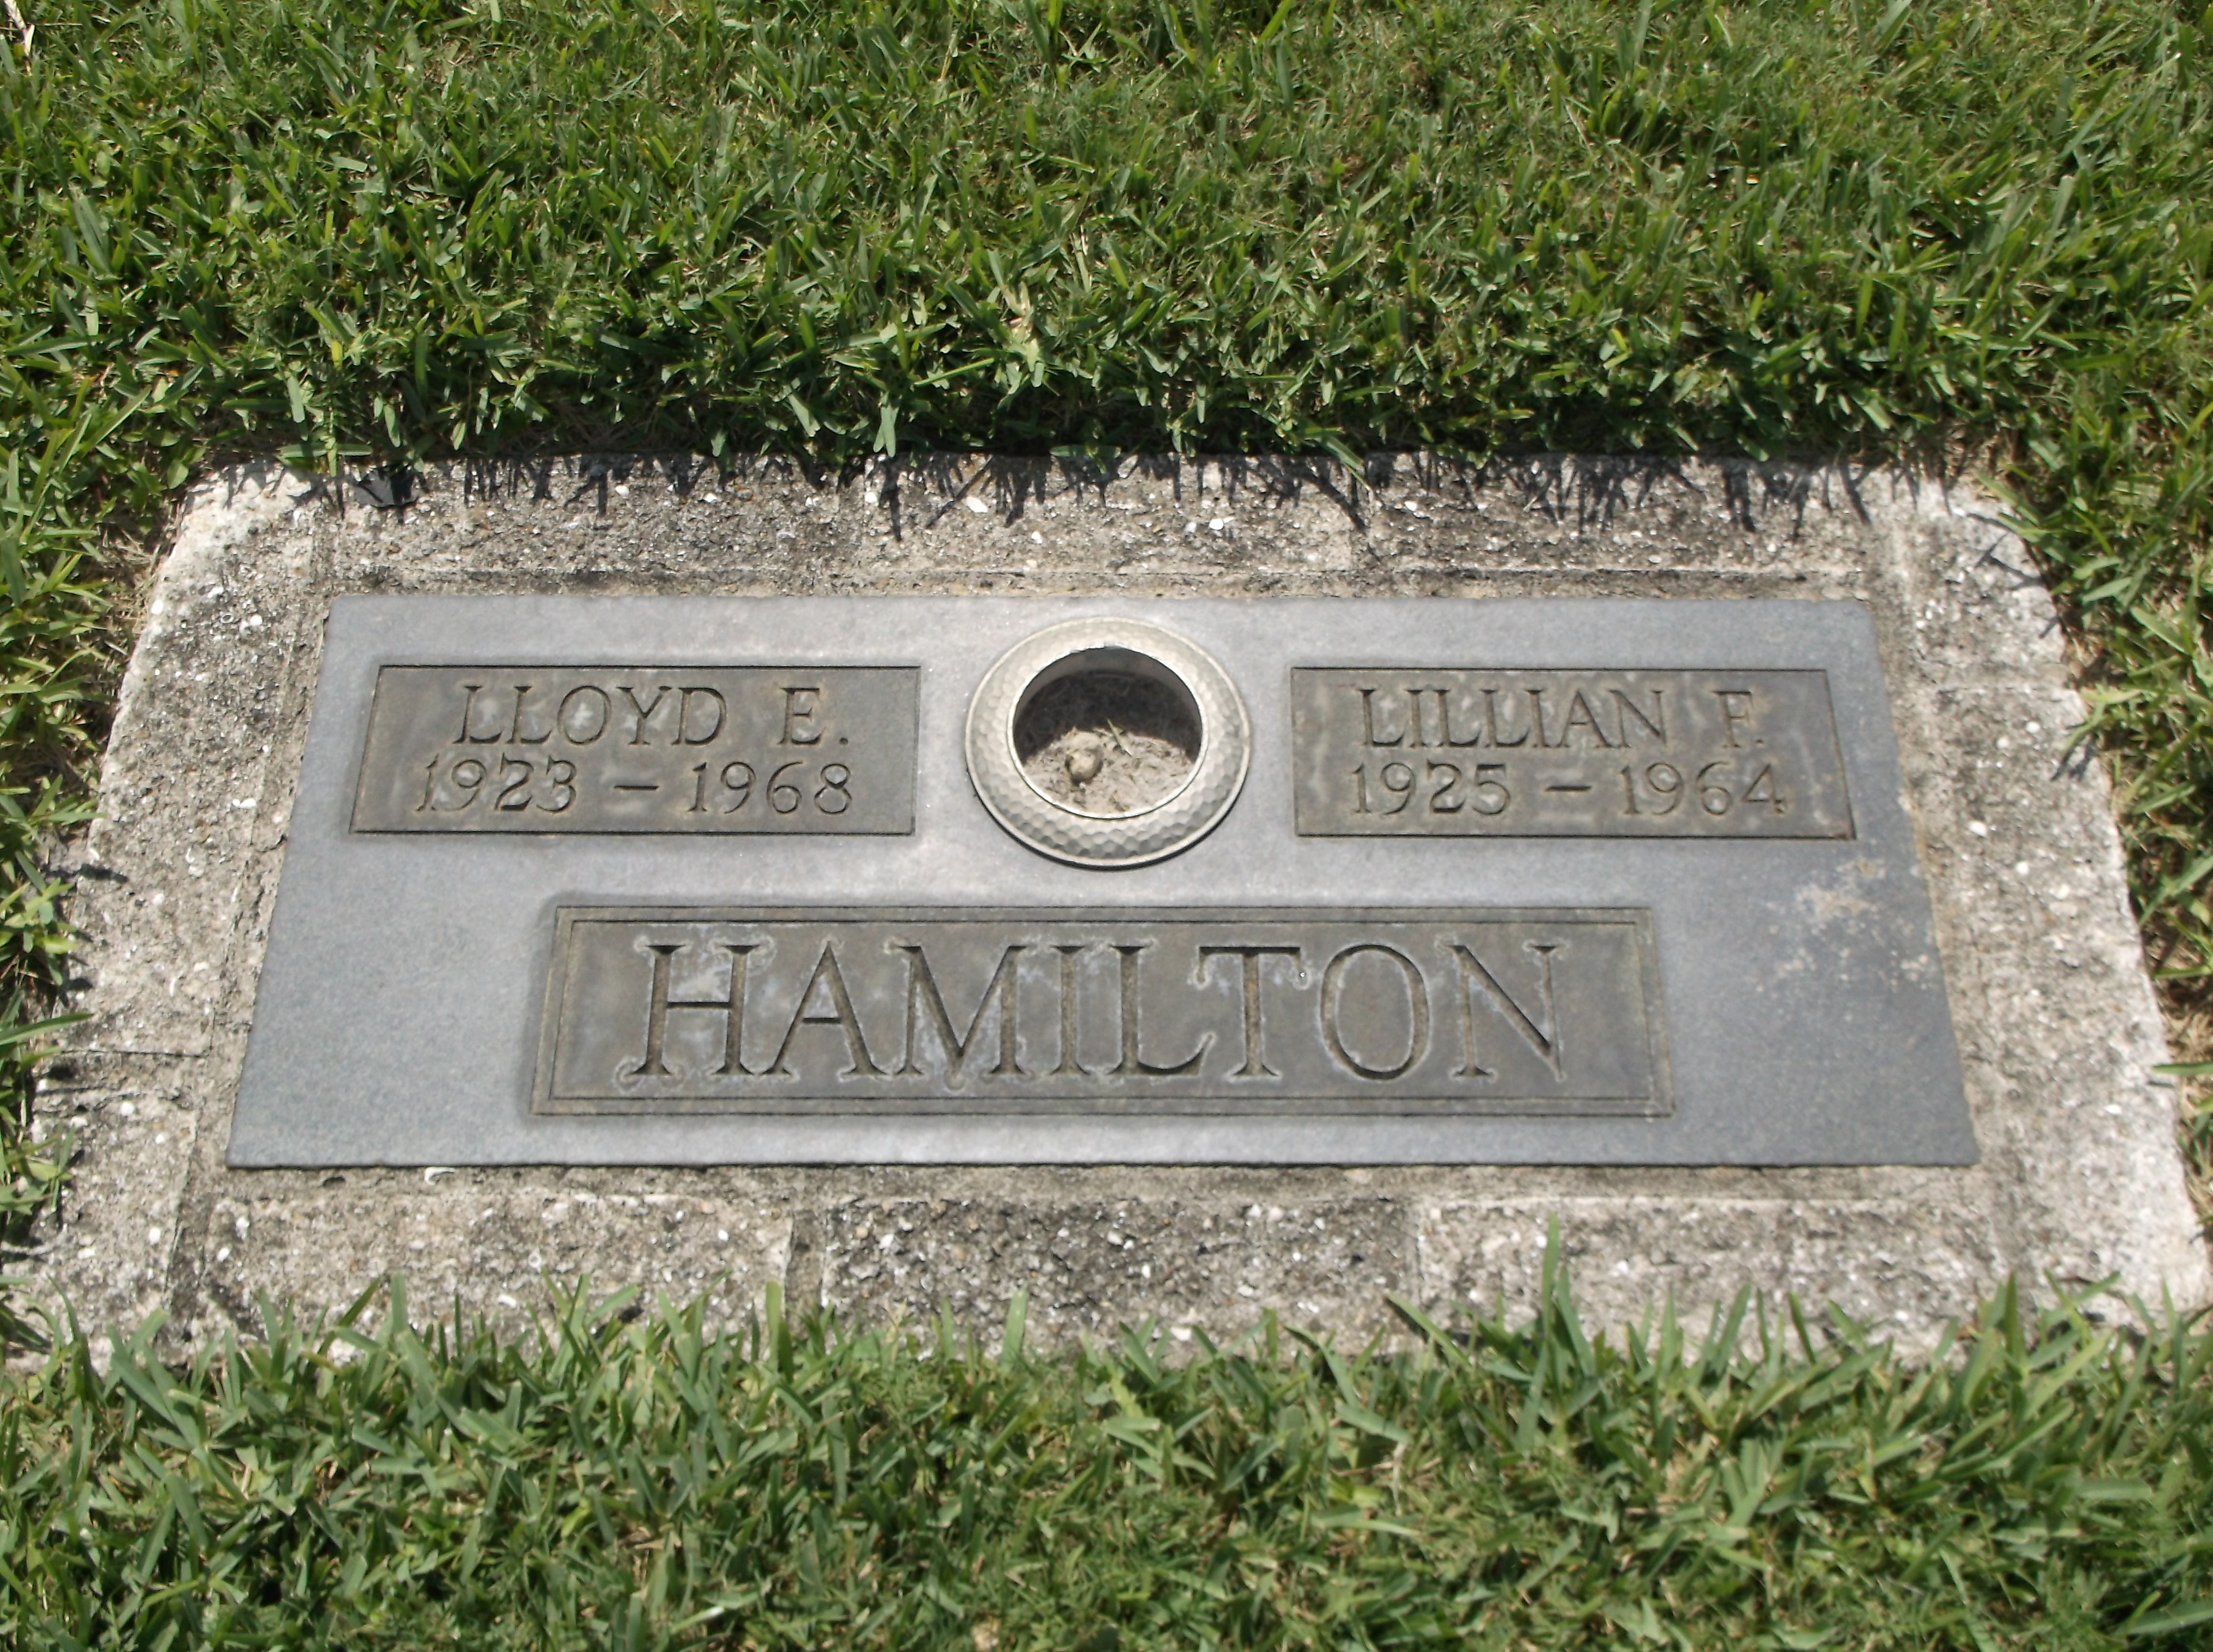 Lloyd E Hamilton